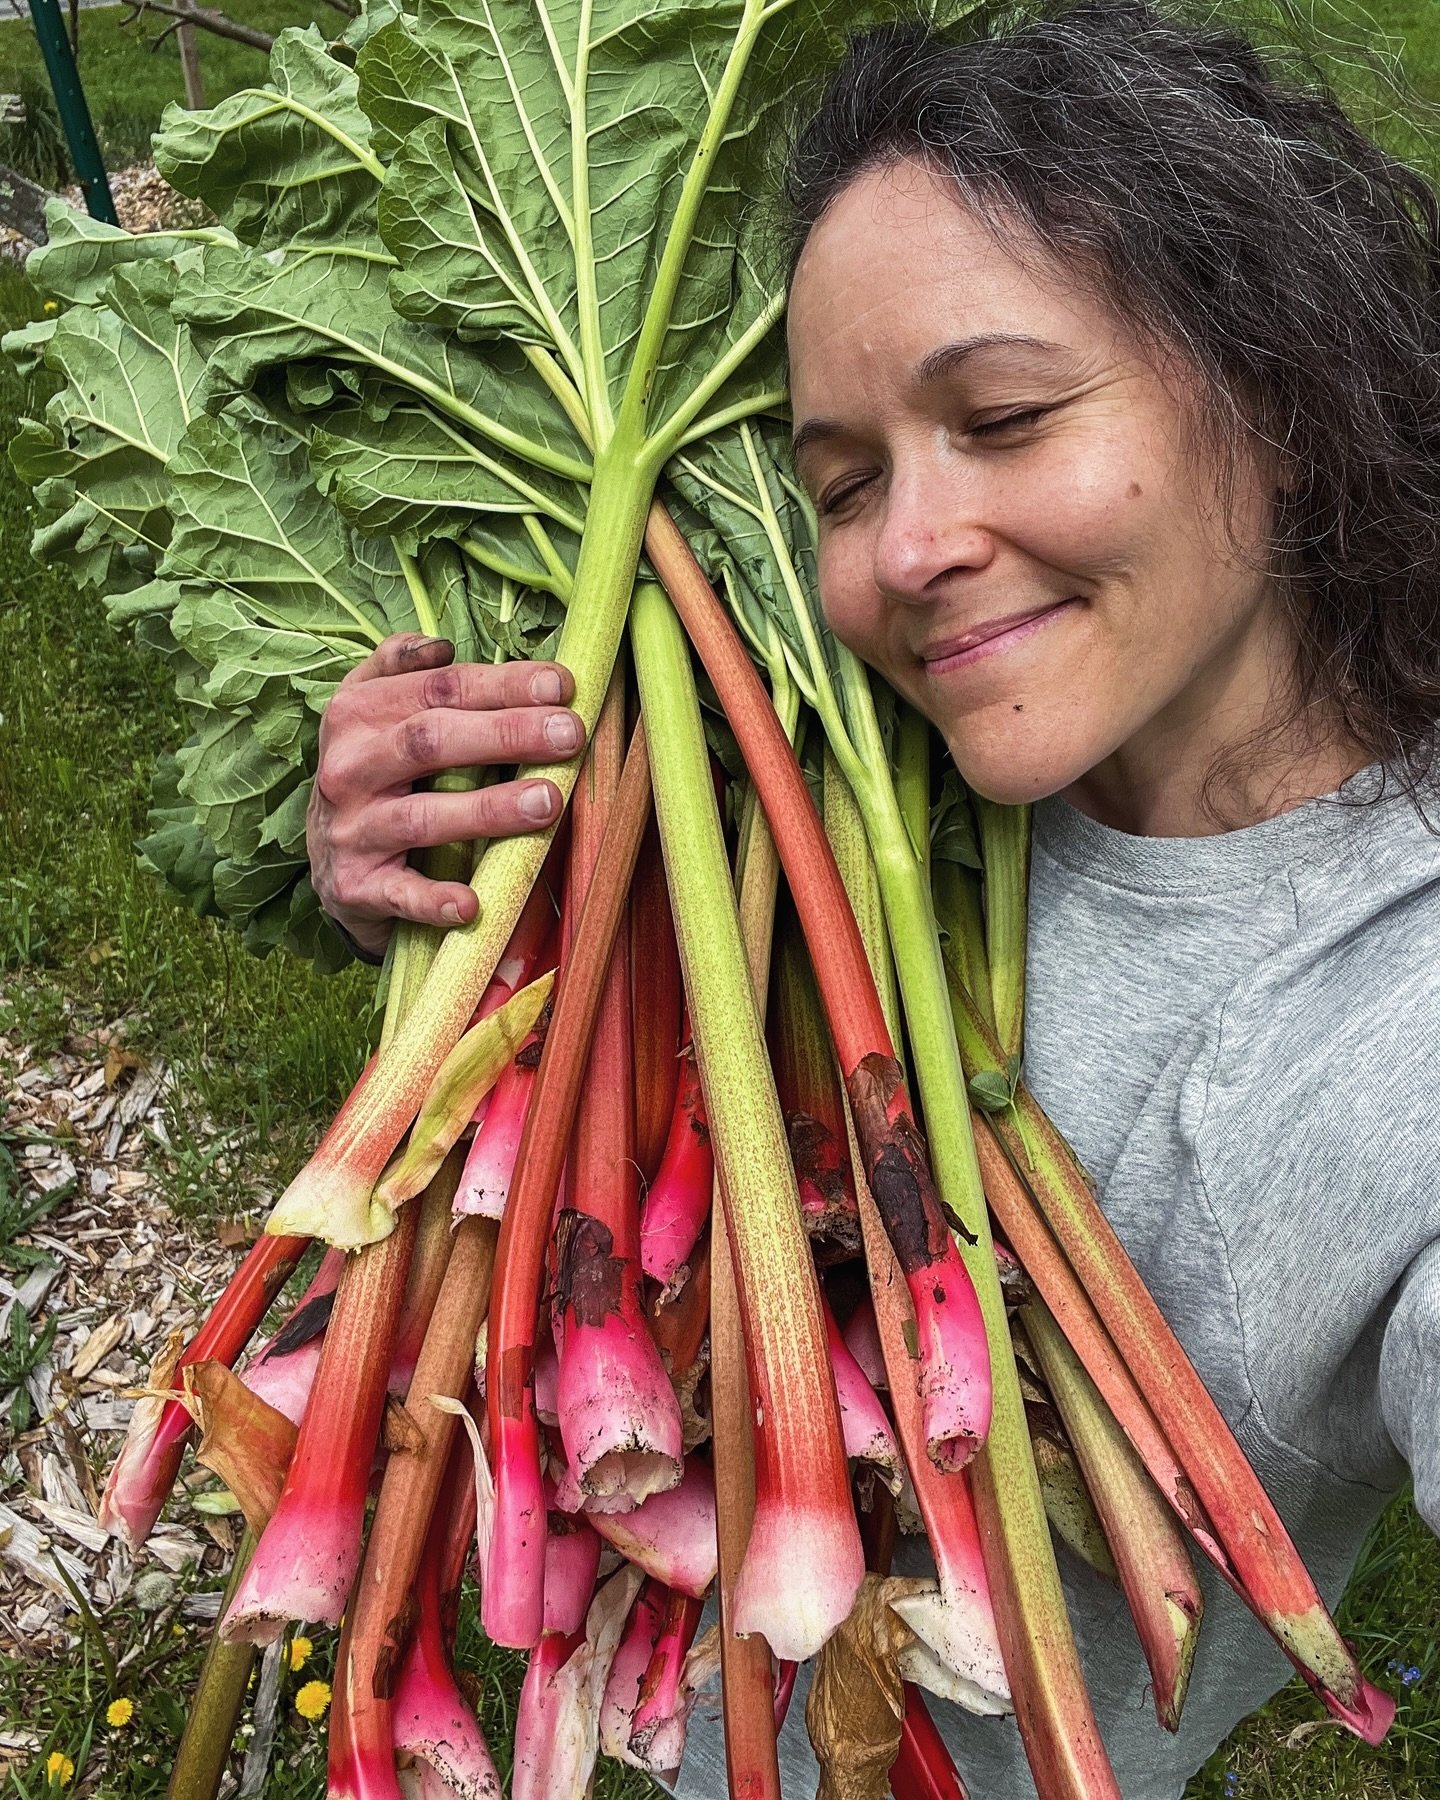 Have you hugged your rhubarb lately? #AnnualRhubarbAppreciationPost  #HudsonValley #rhubarb #harvest #ArdentHomesteader #HomesteadLife